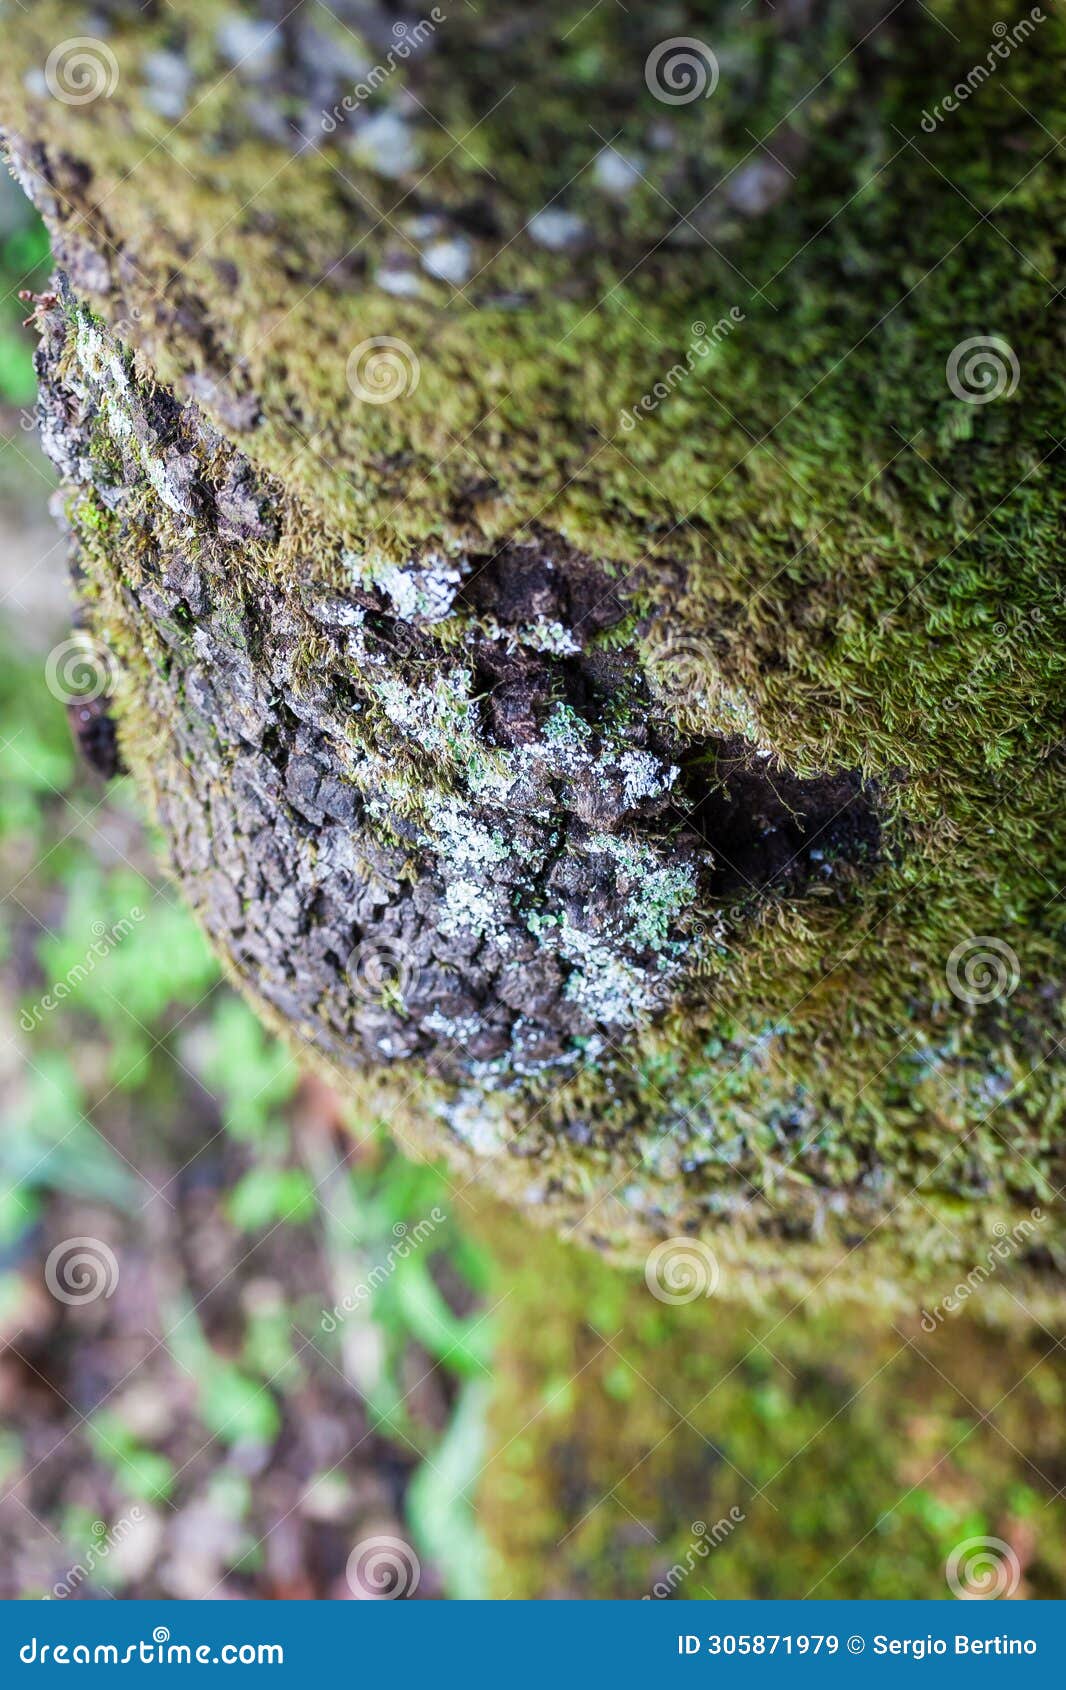 green lichen growing on overhanging rocks